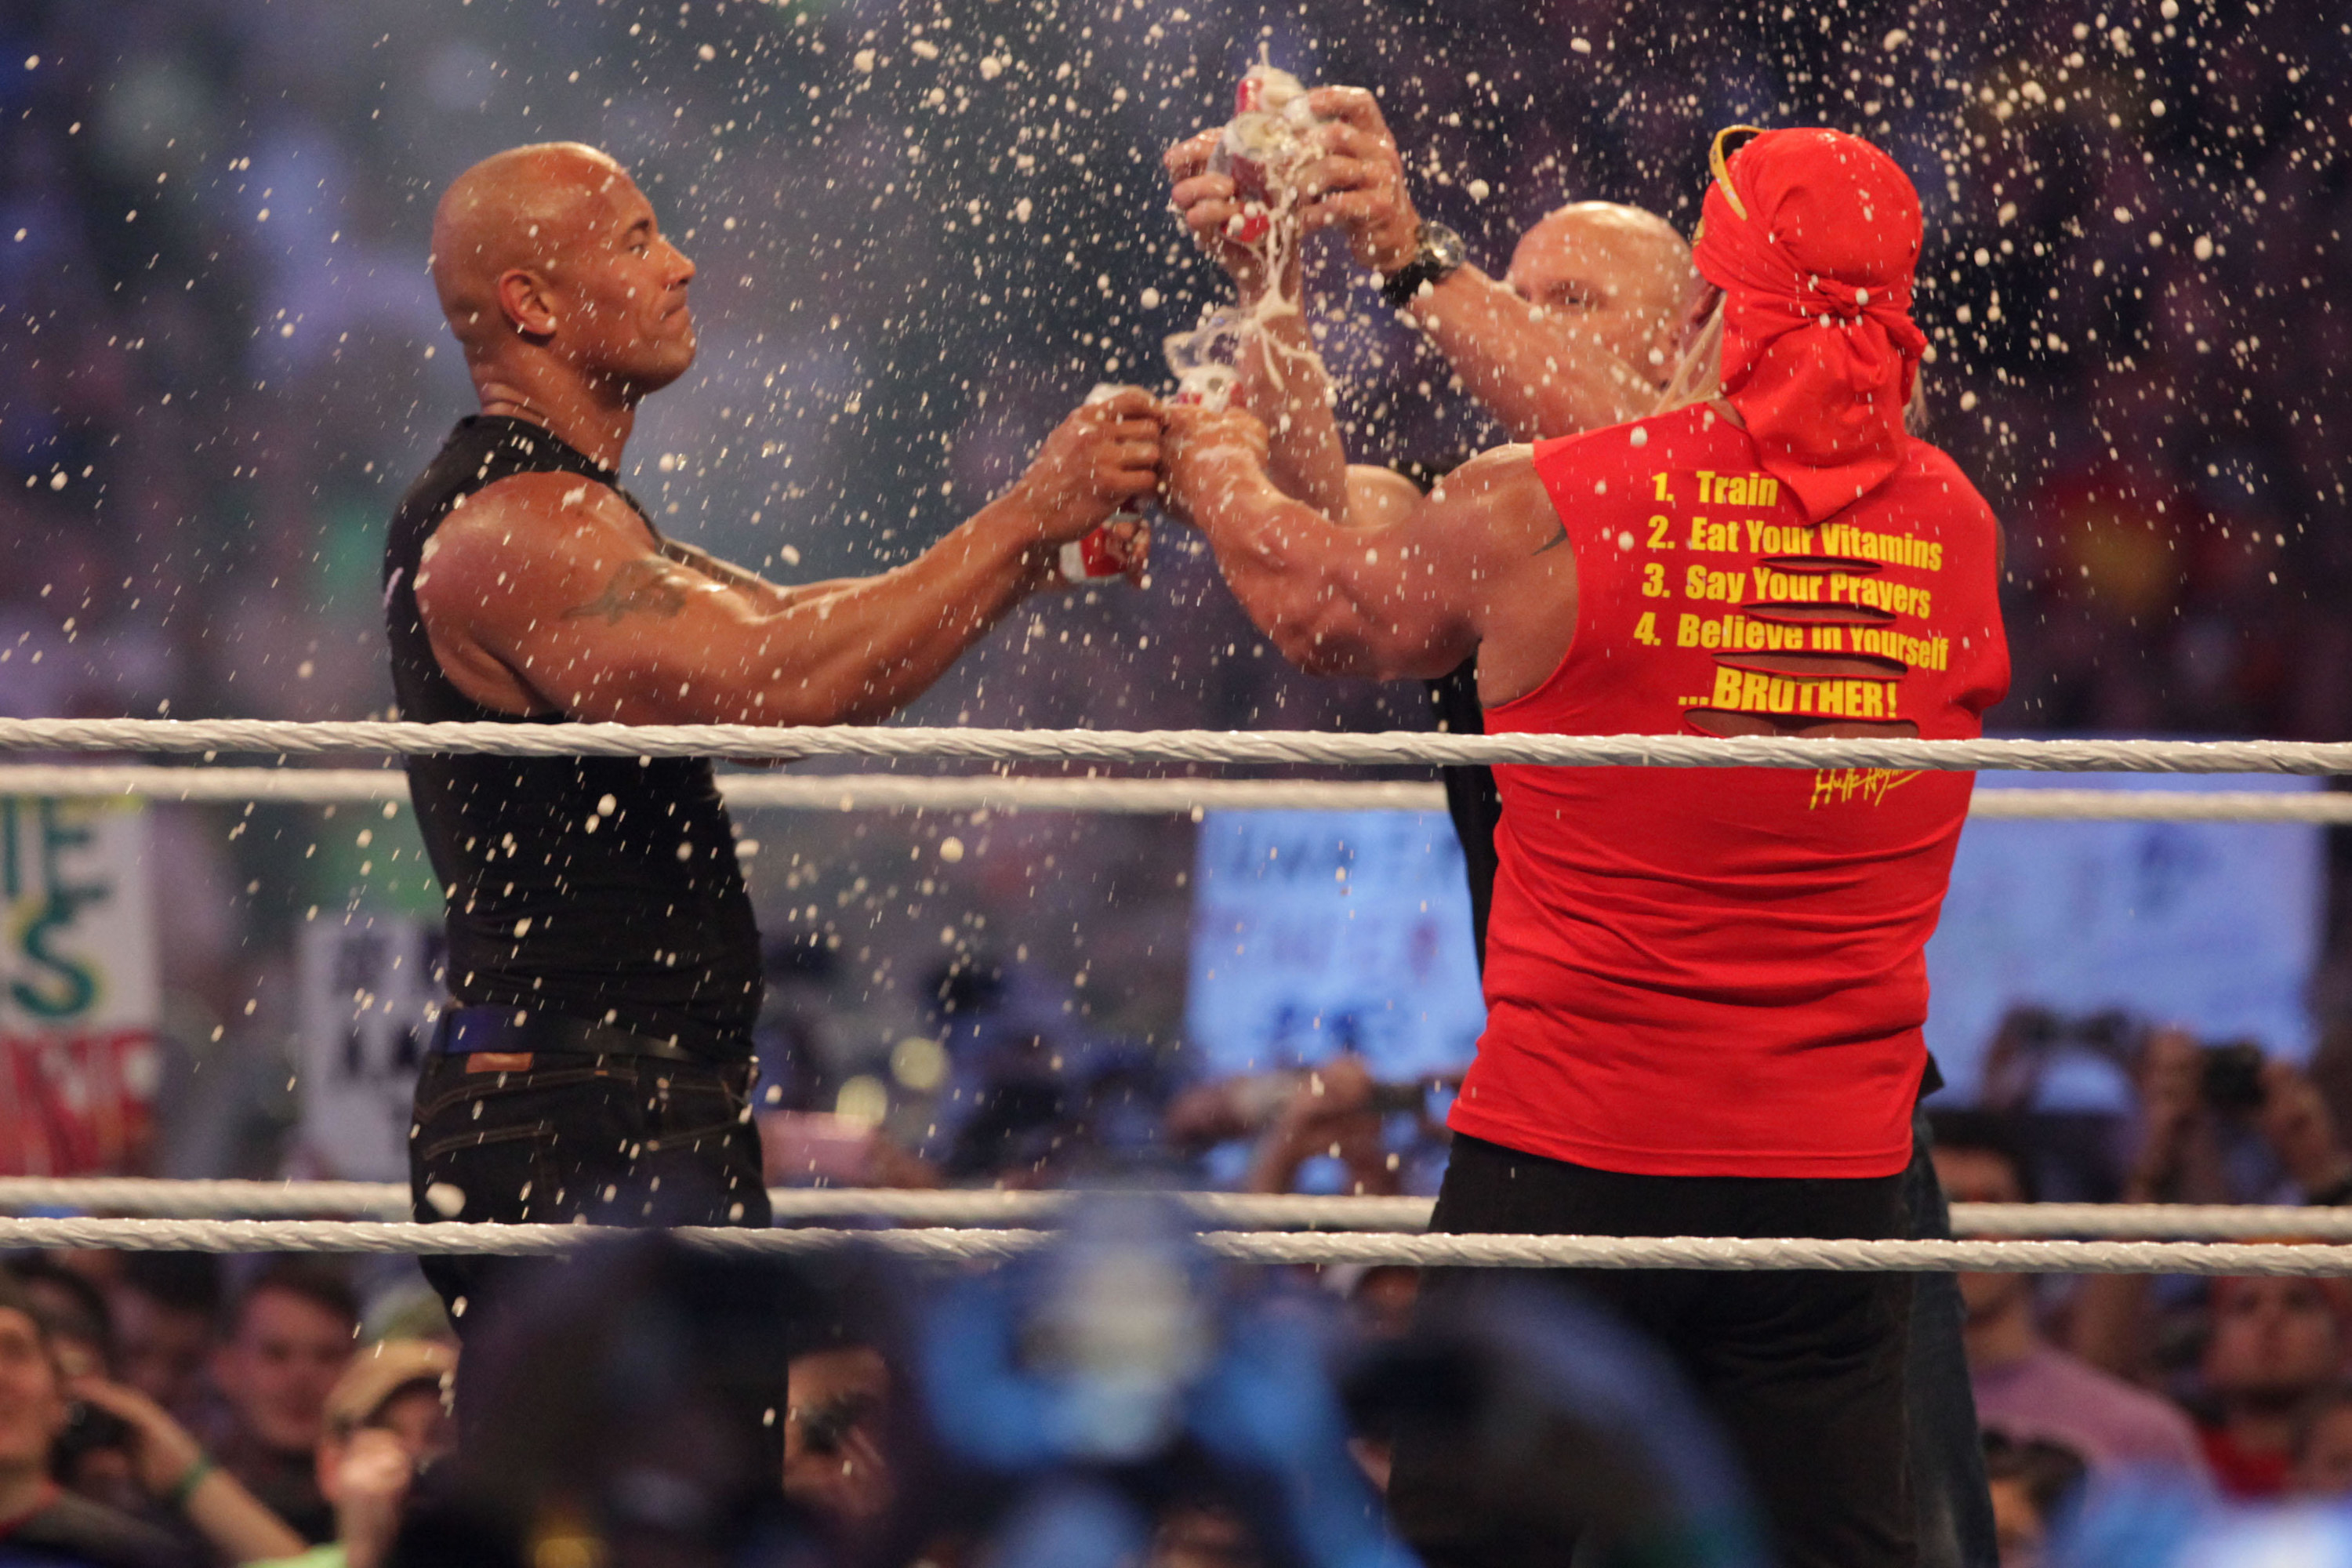 The Rock, Steve Austin, and Hulk Hogan kicking off Wrestlemania 30 at the Super Dome